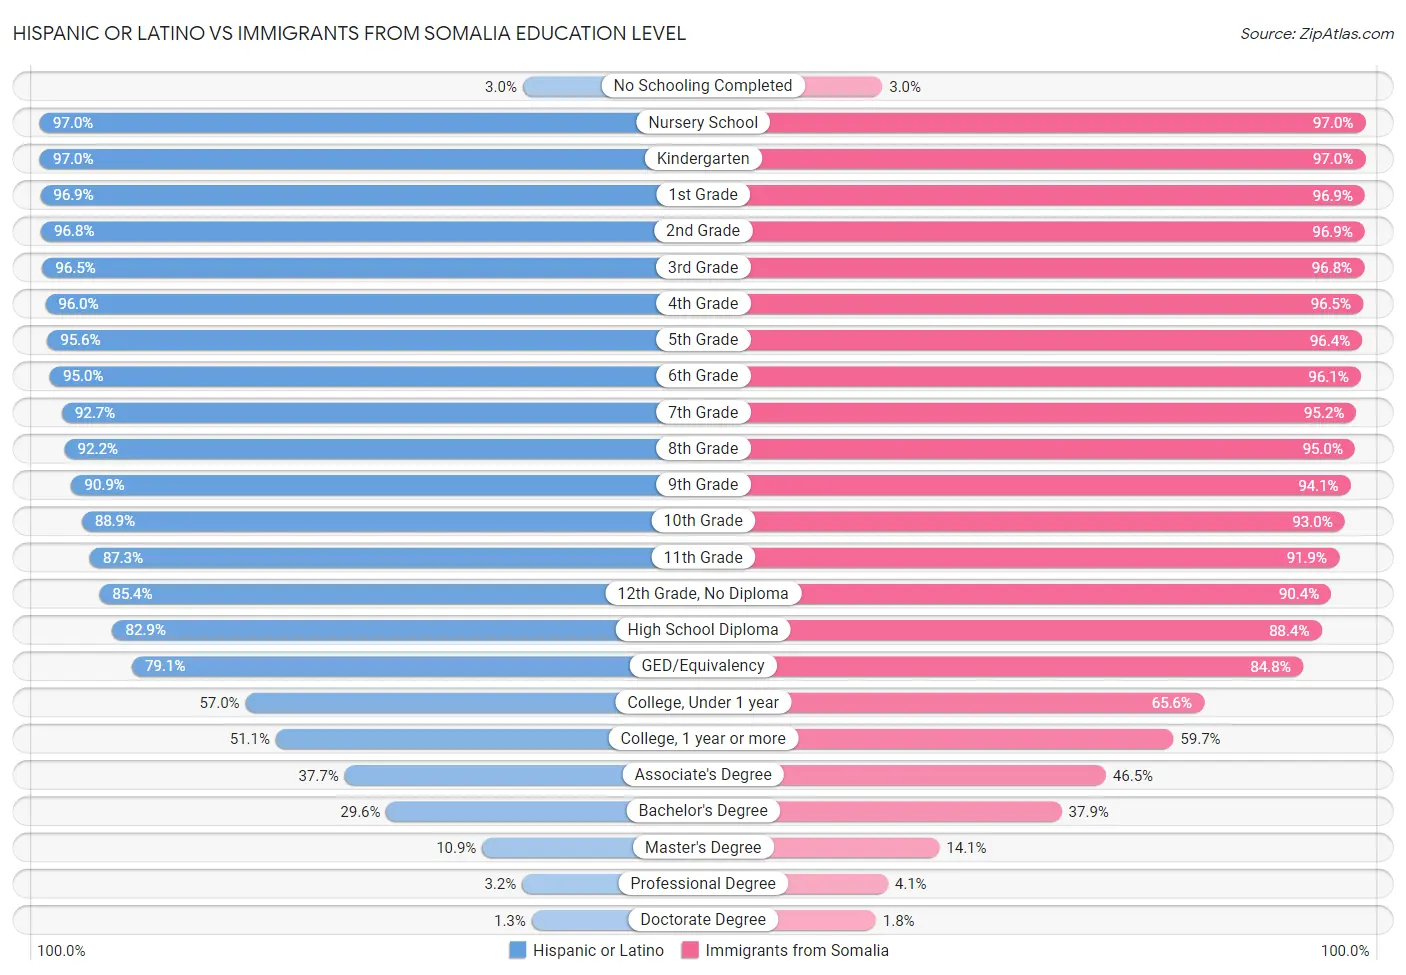 Hispanic or Latino vs Immigrants from Somalia Education Level